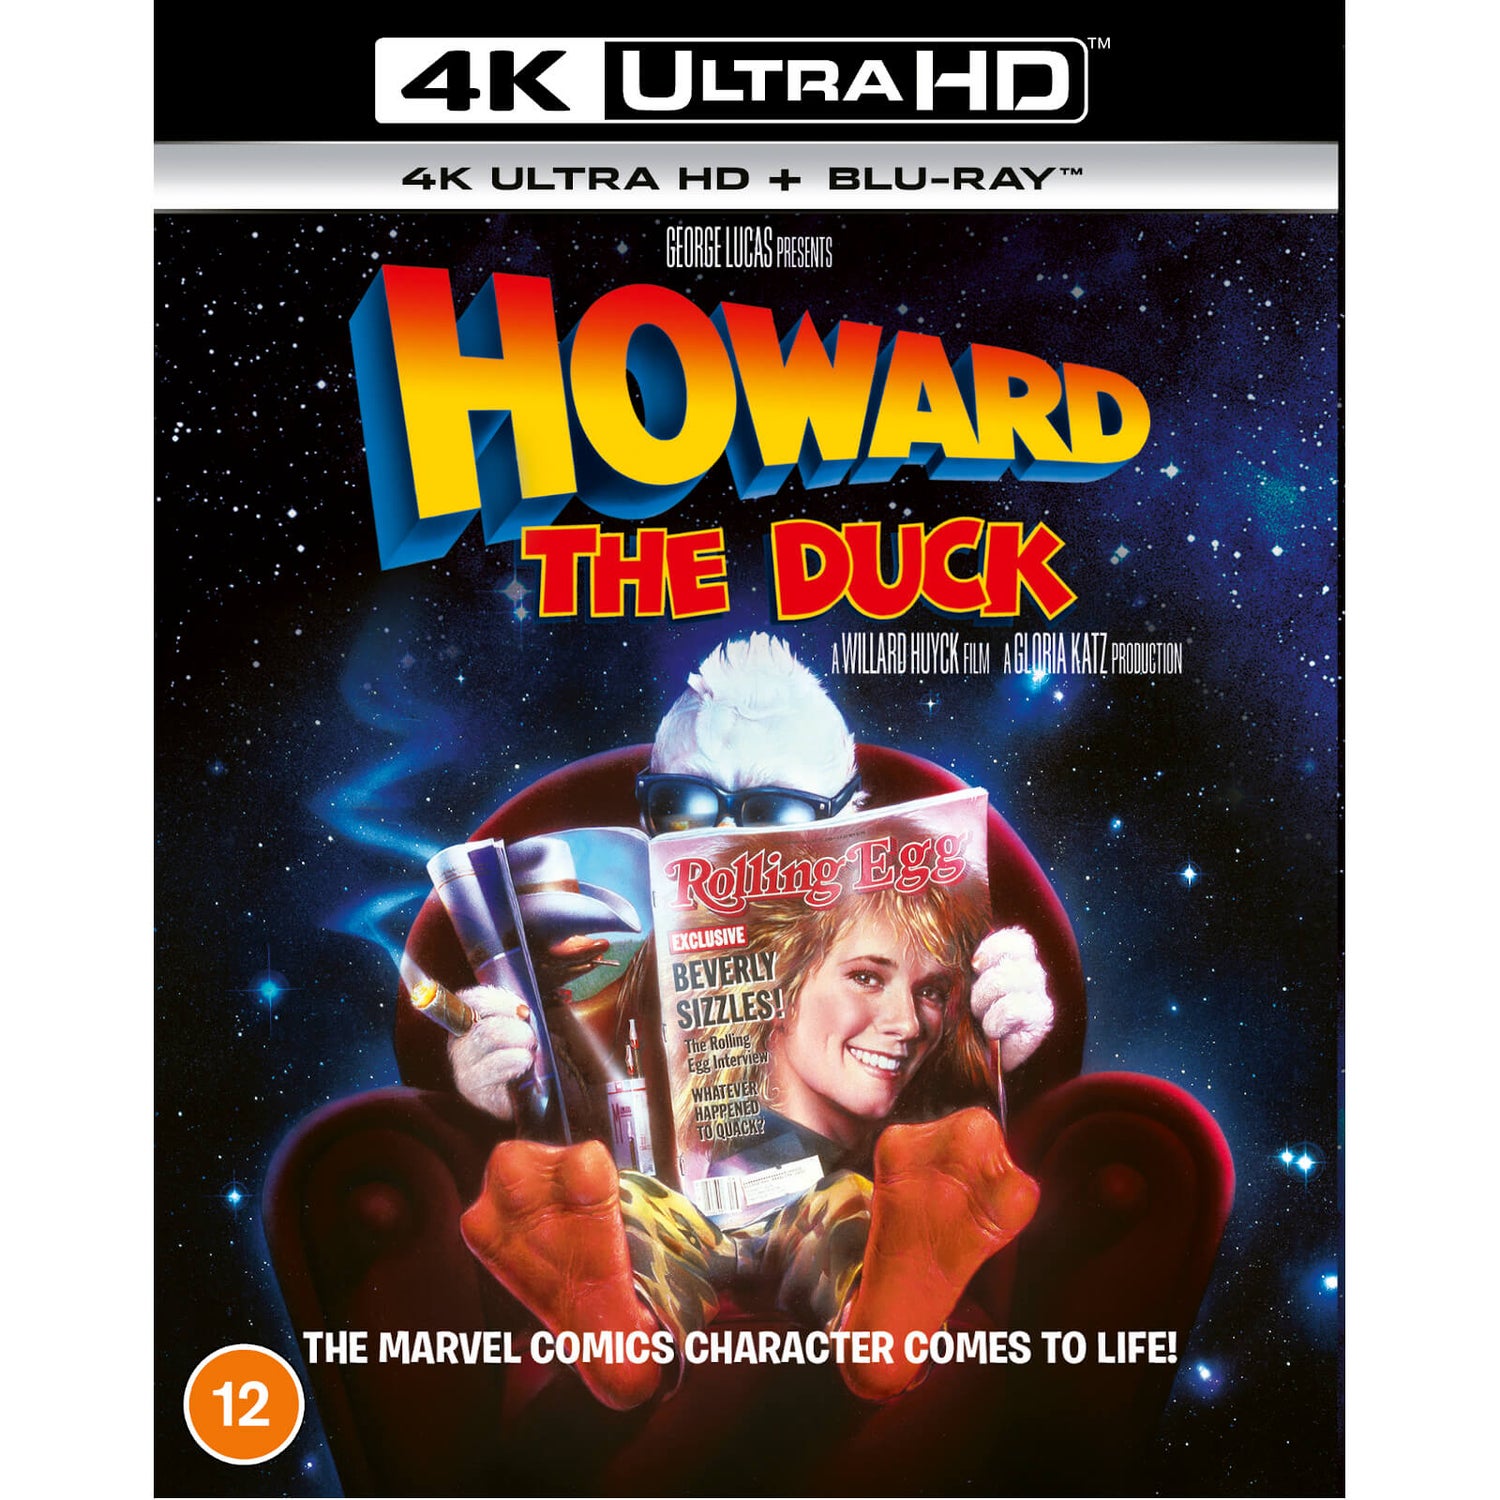 Howard the Duck - 4K Ultra HD (Includes Blu-ray)